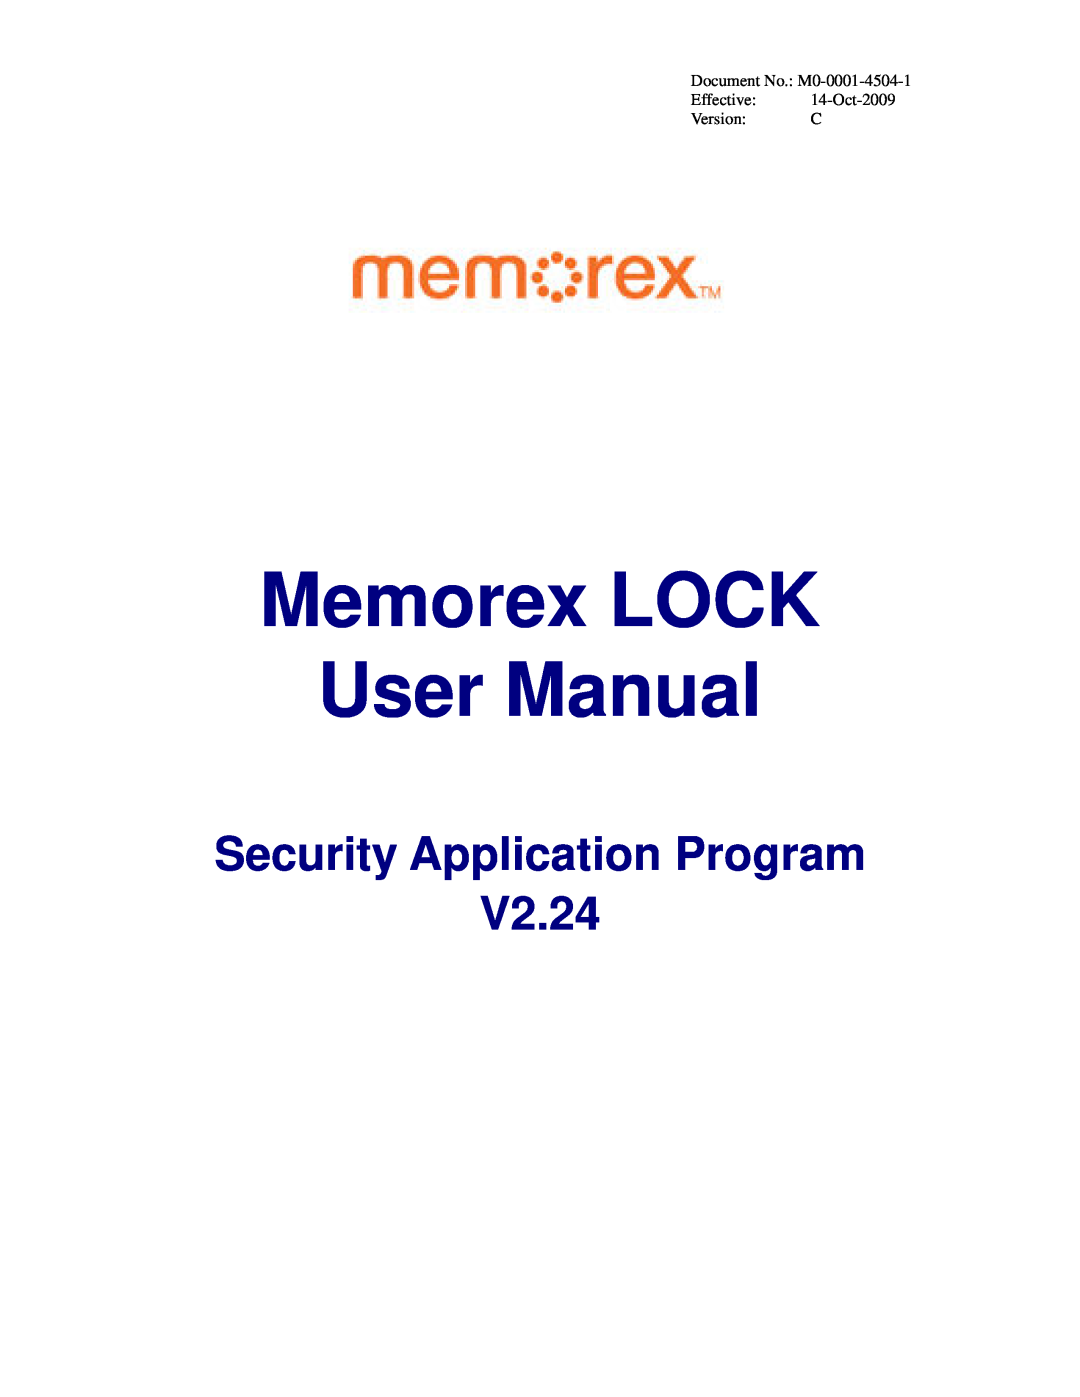 Memorex user manual Security Application Program 